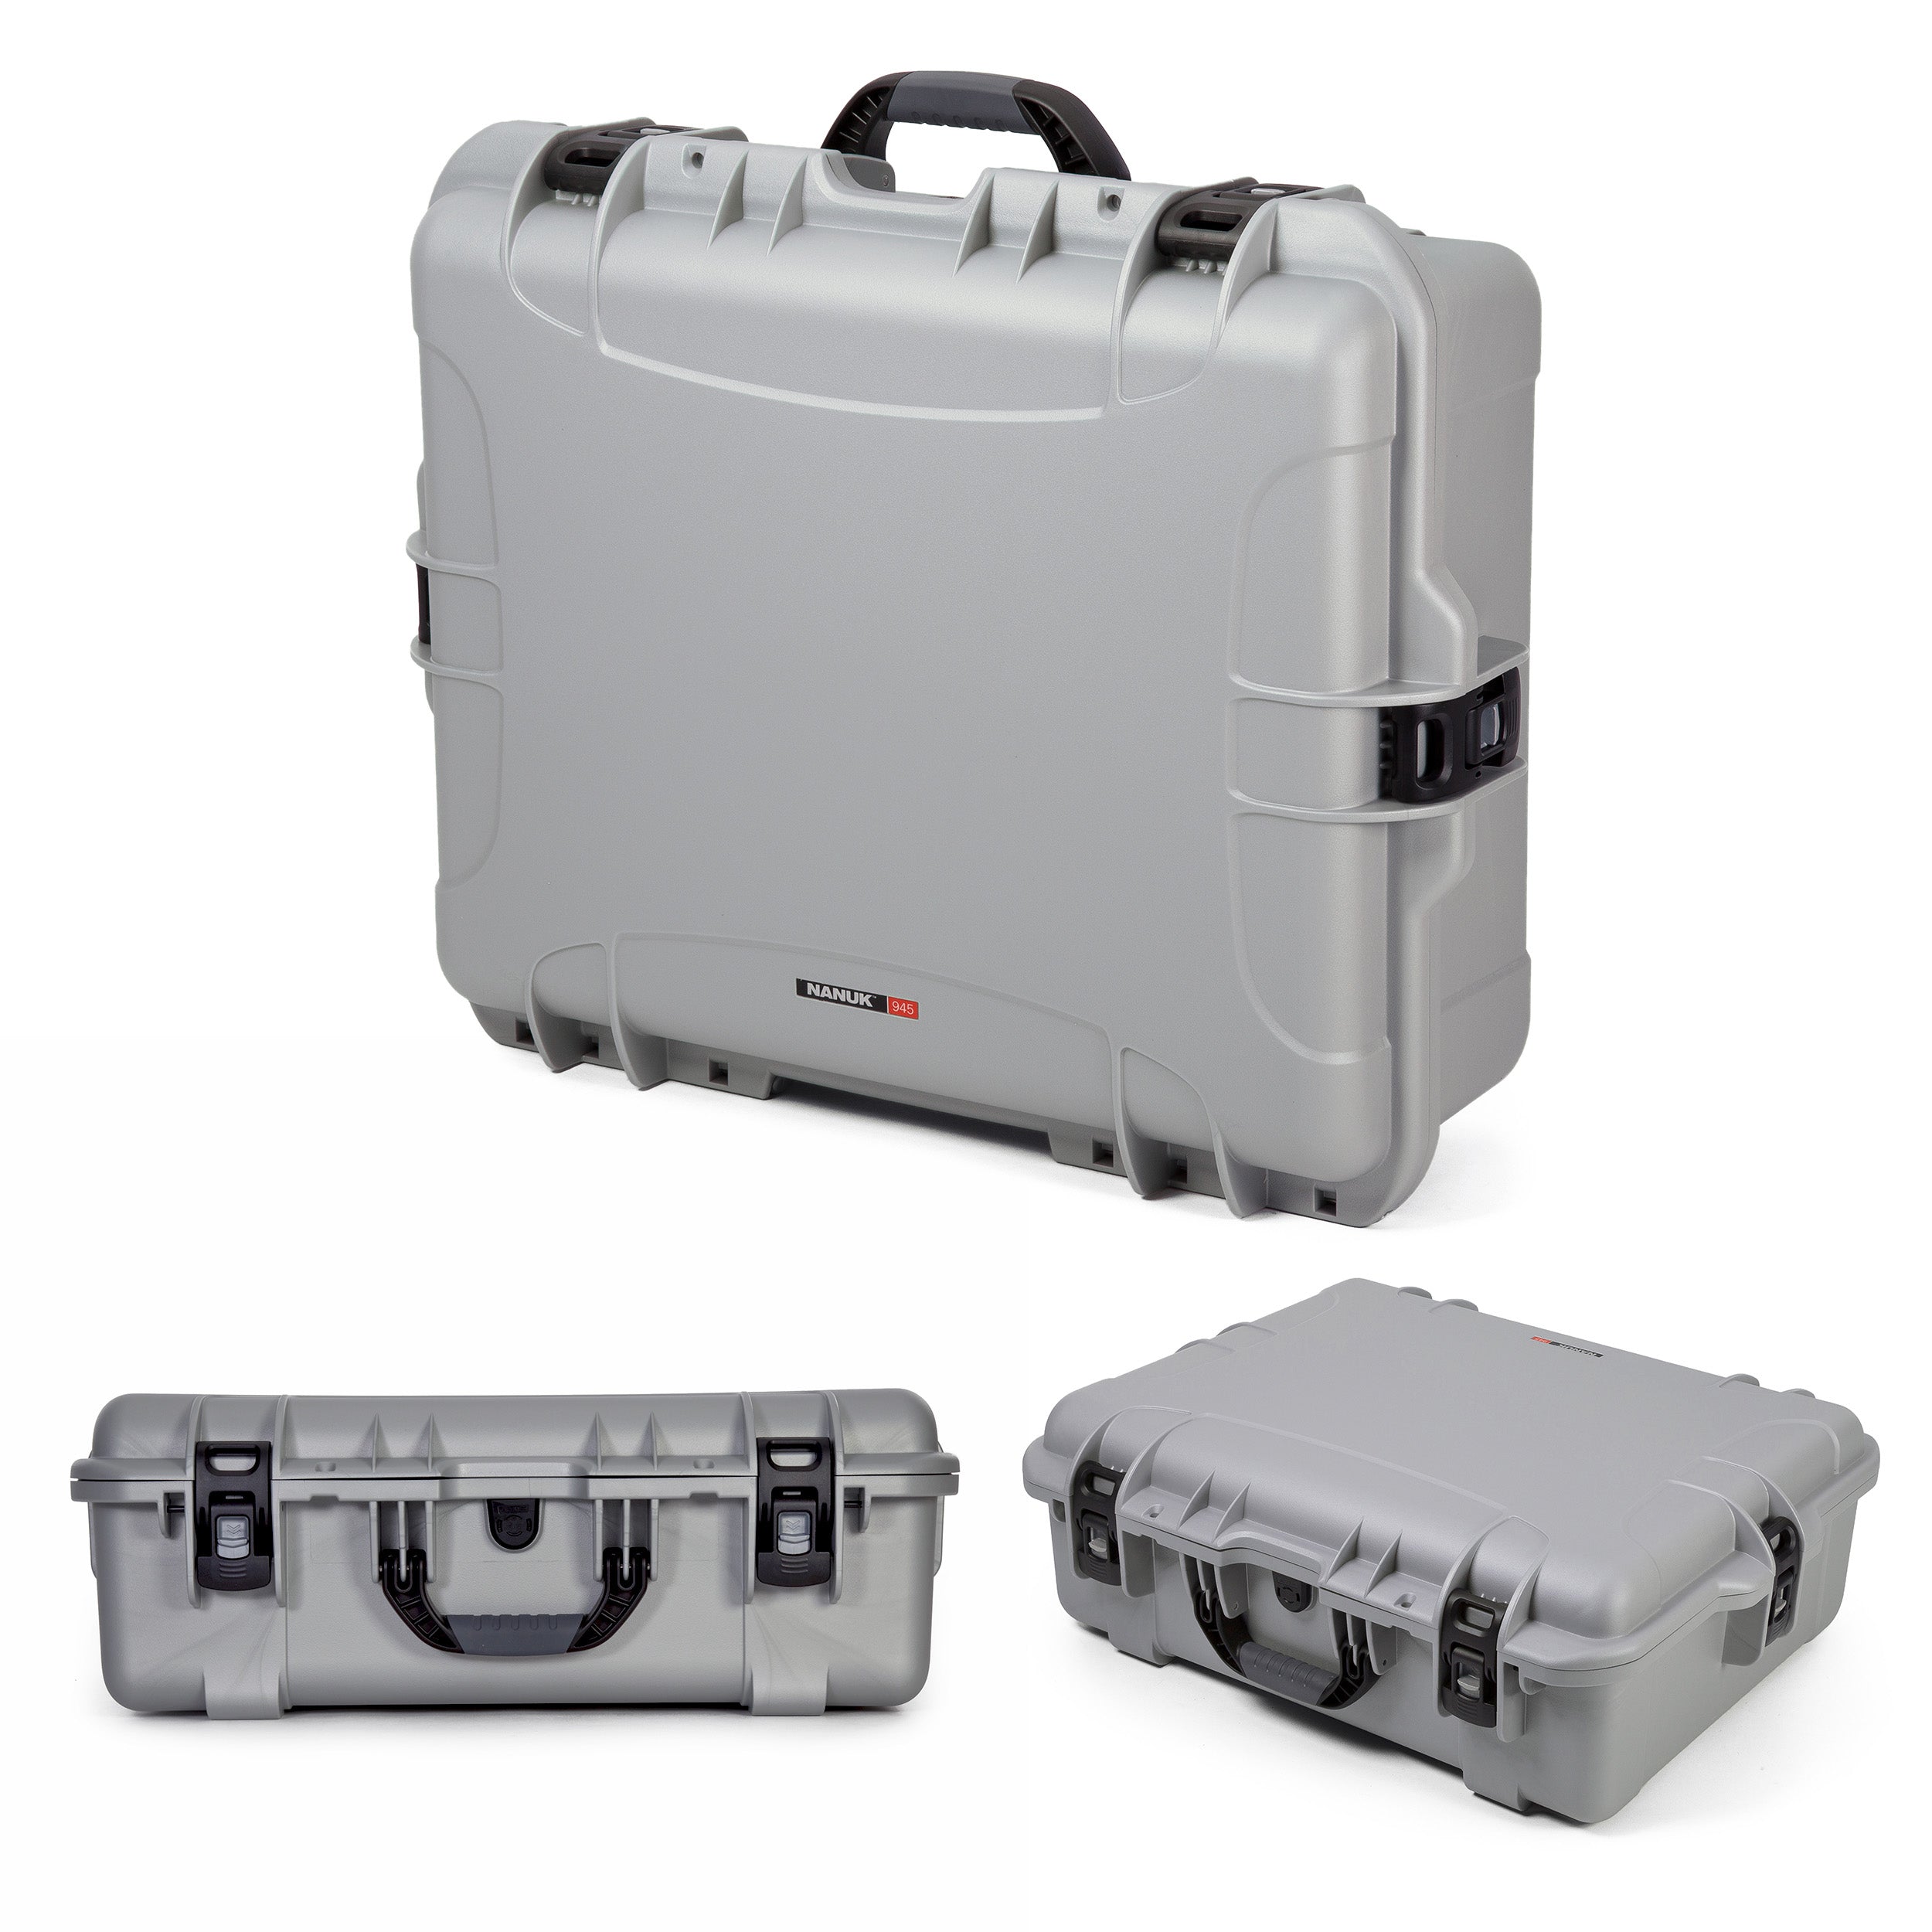 Nanuk 945-DJI45 Waterproof Hard Drone Case with Custom Foam Insert for DJI Phantom 4/ Phantom 4 Pro (Pro+) / Advanced (Advanced+) & Phantom 3 - Silver